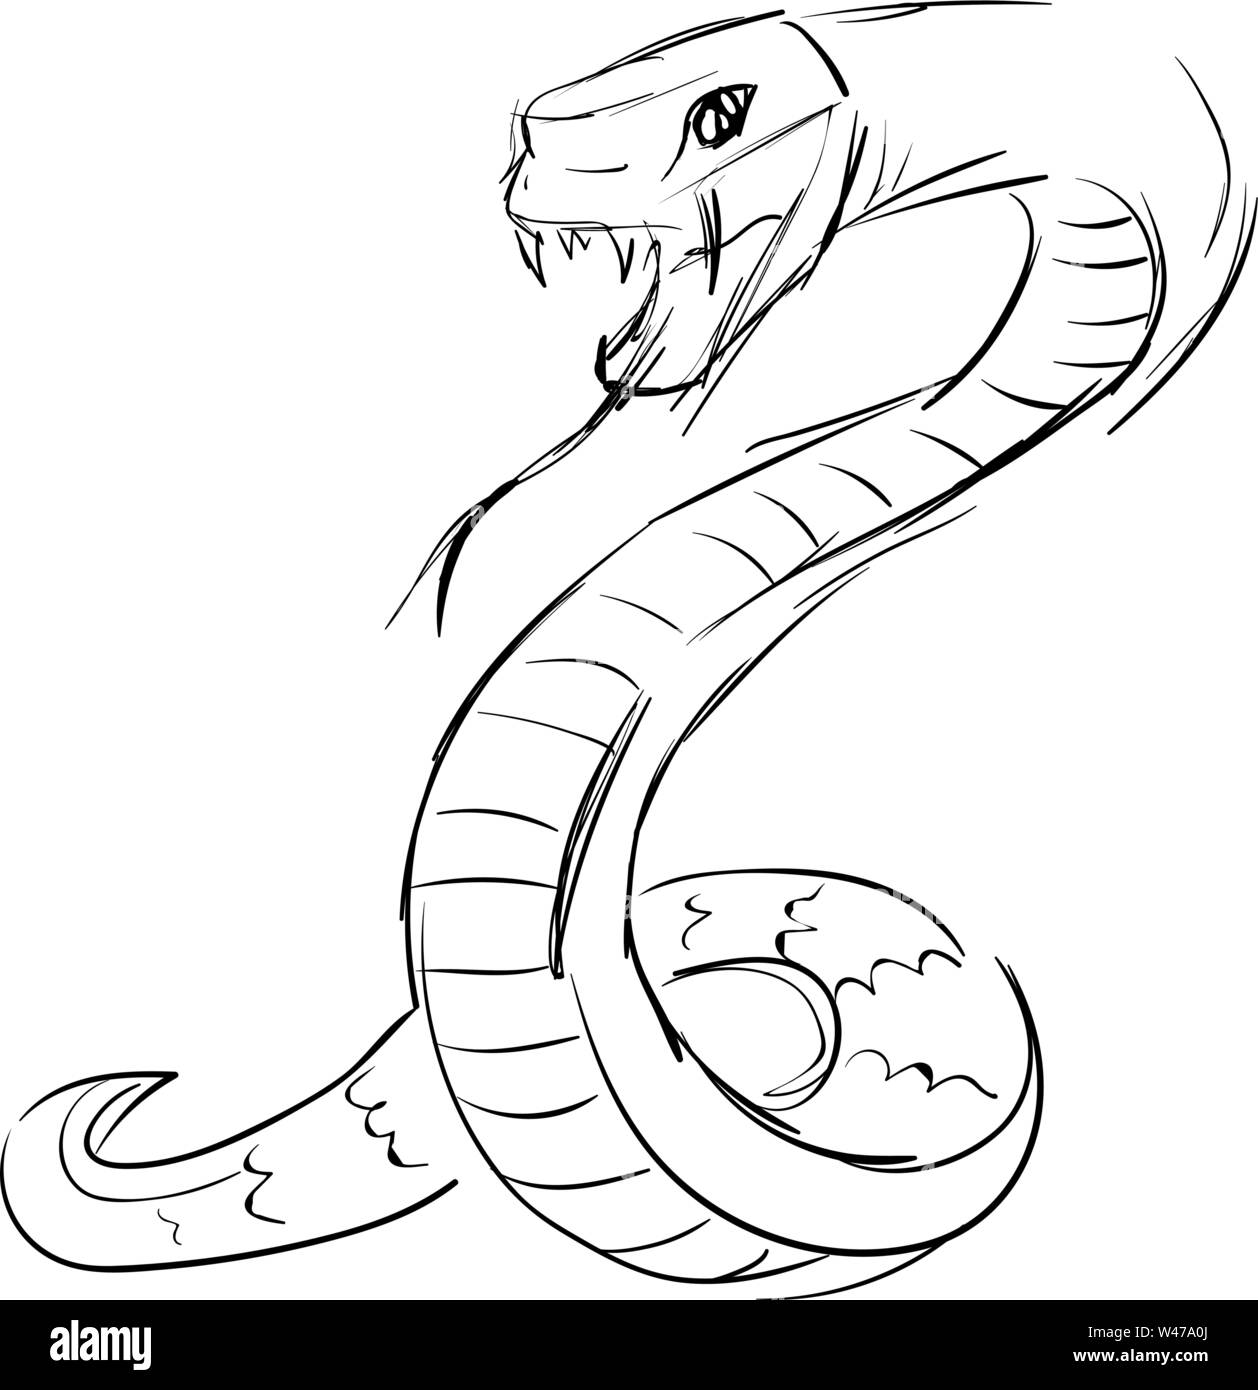 Snake drawing, illustration, vector on white background Stock Vector